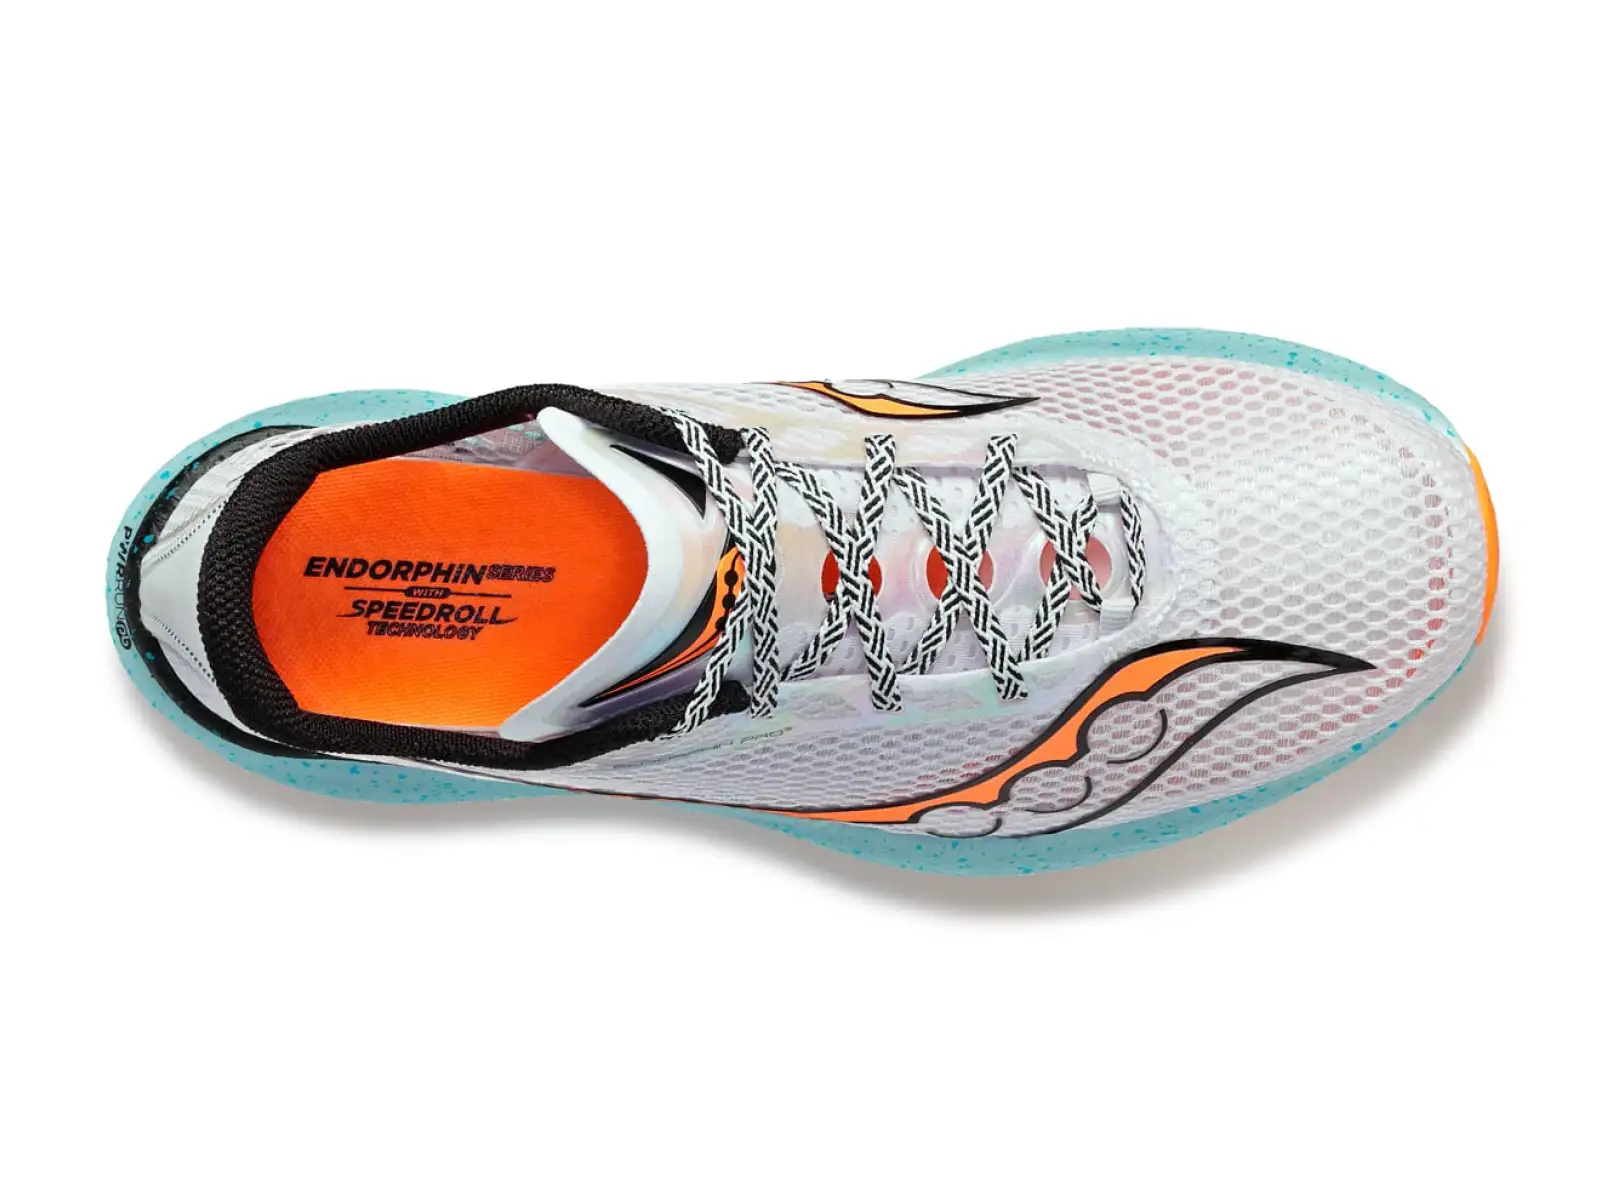 Saucony Endorphin Pro 3 běžecké boty Fog/Vizi Orange